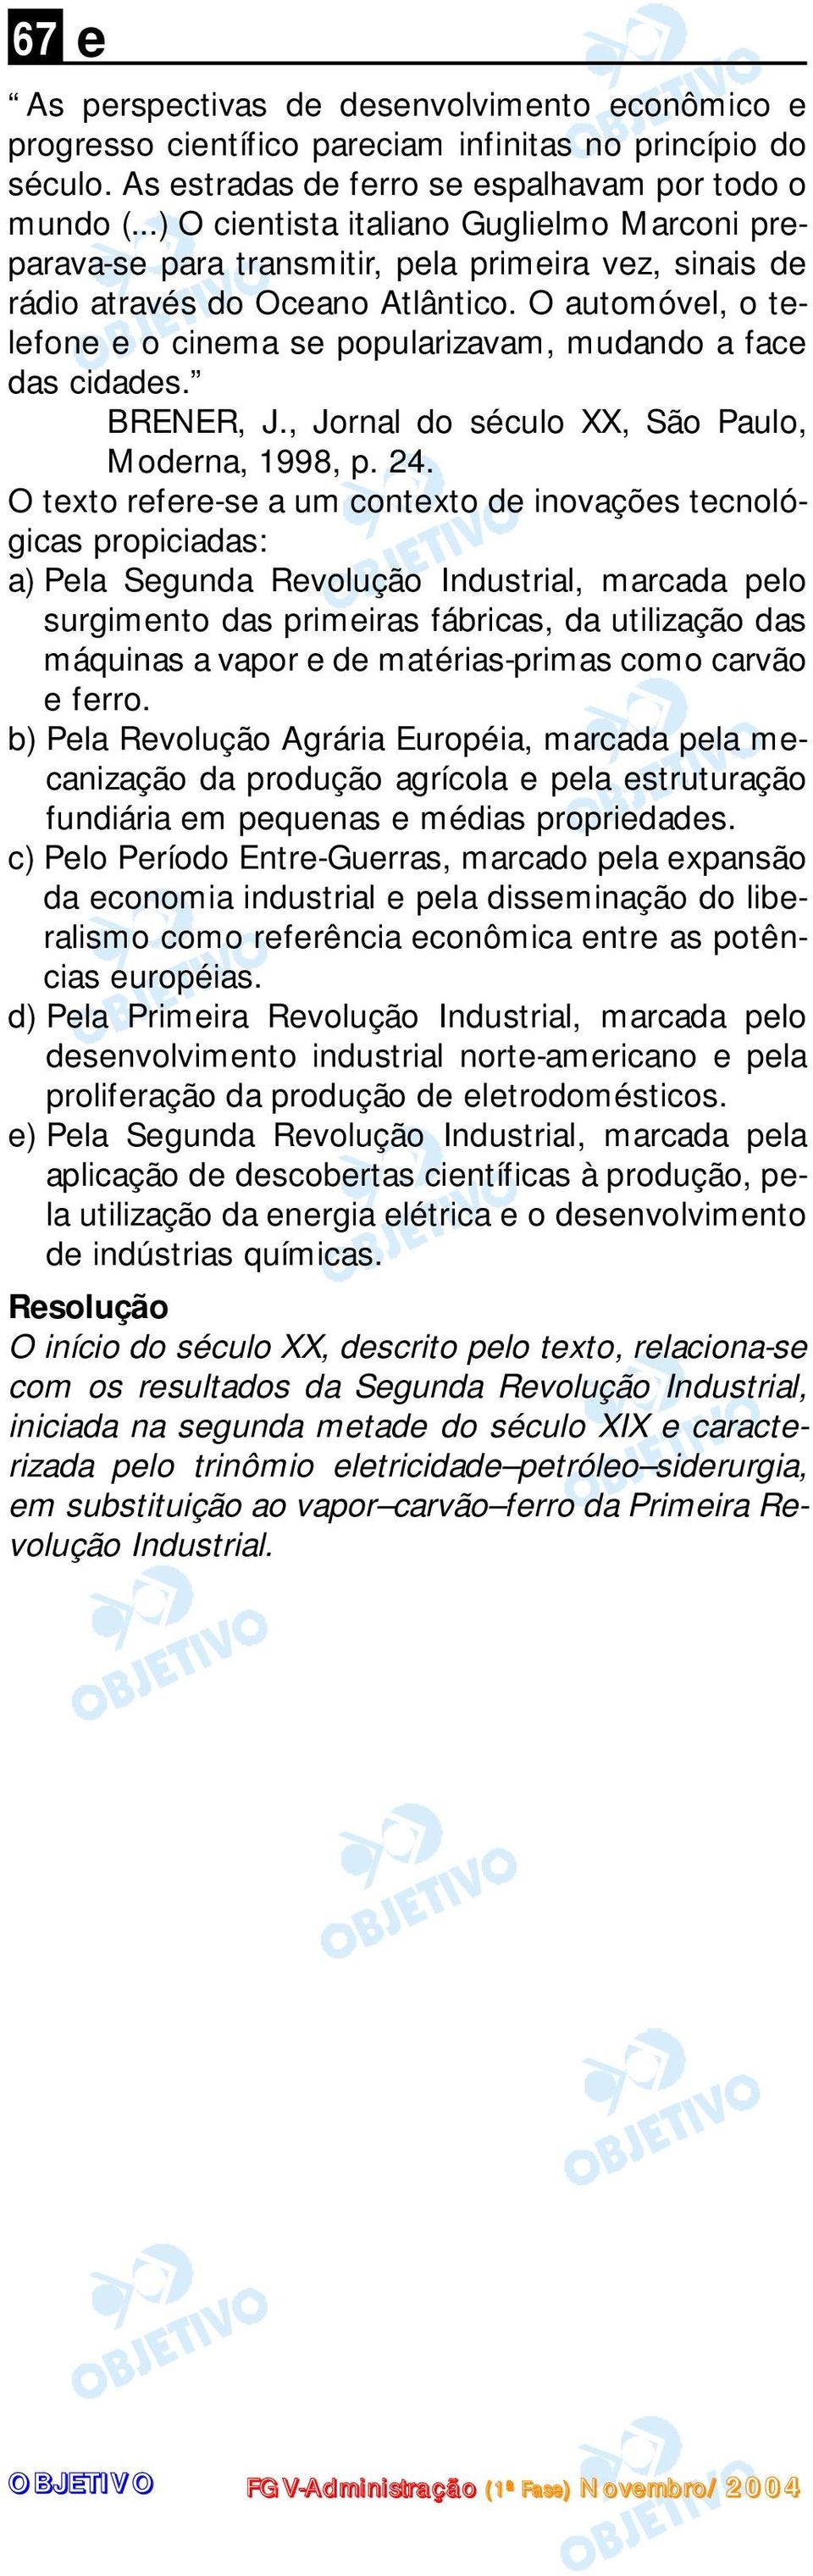 BRENER, J., Jornal do século XX, São Paulo, Modrna, 1998, p. 24.